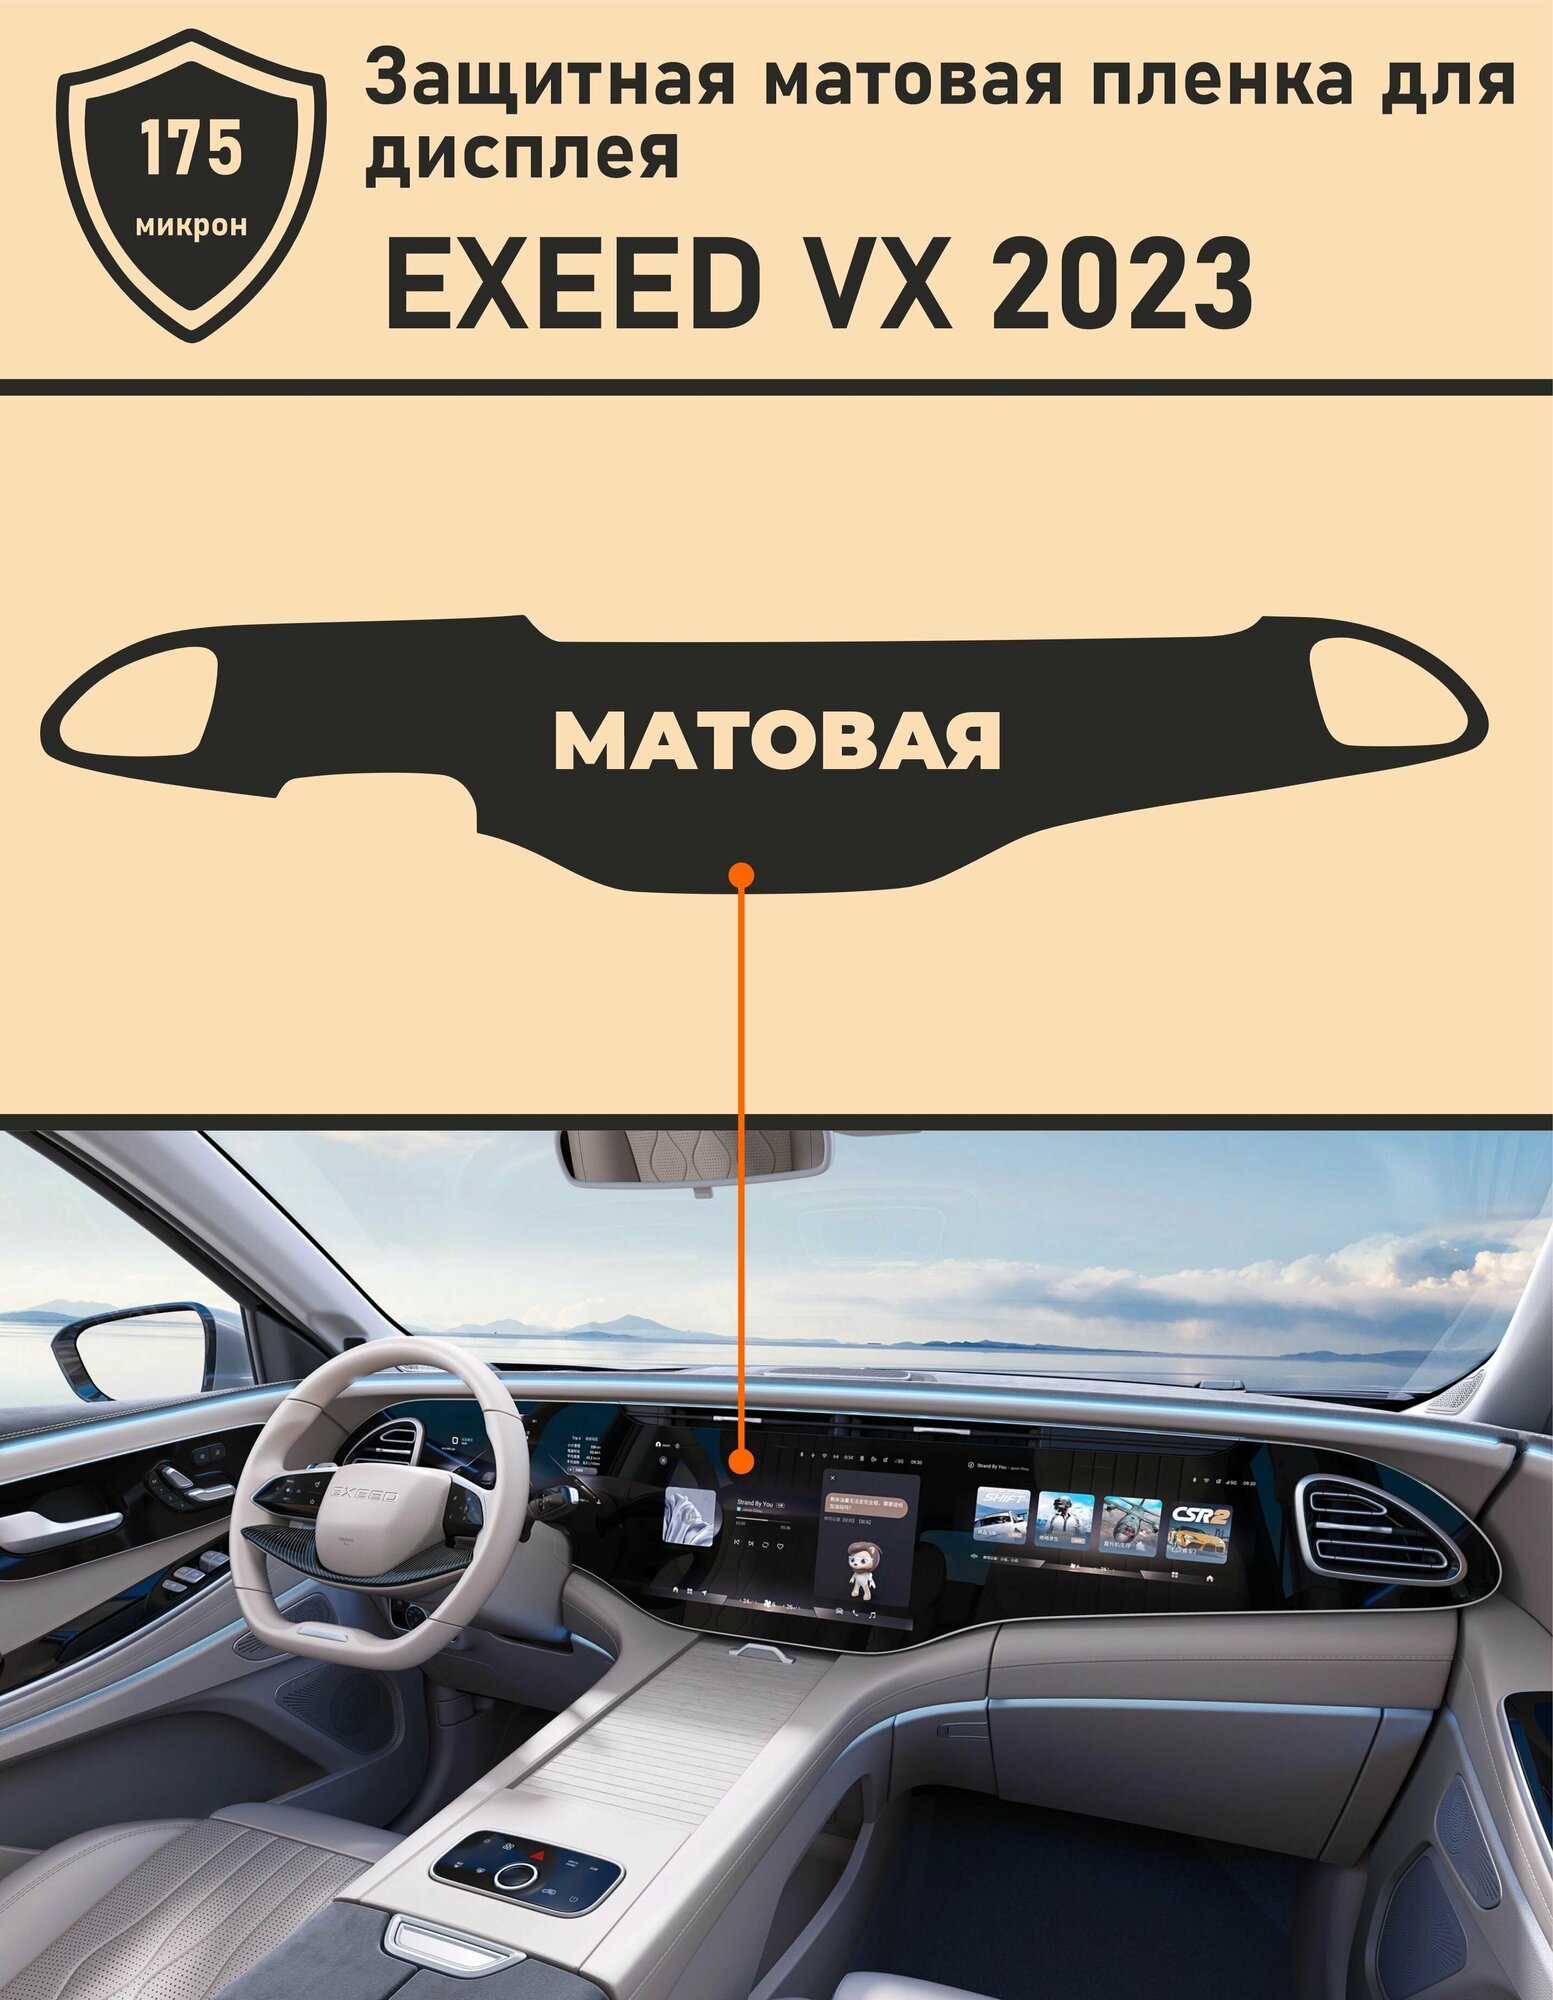 Exeed VX 2023/Защитная матовая пленка для дисплея